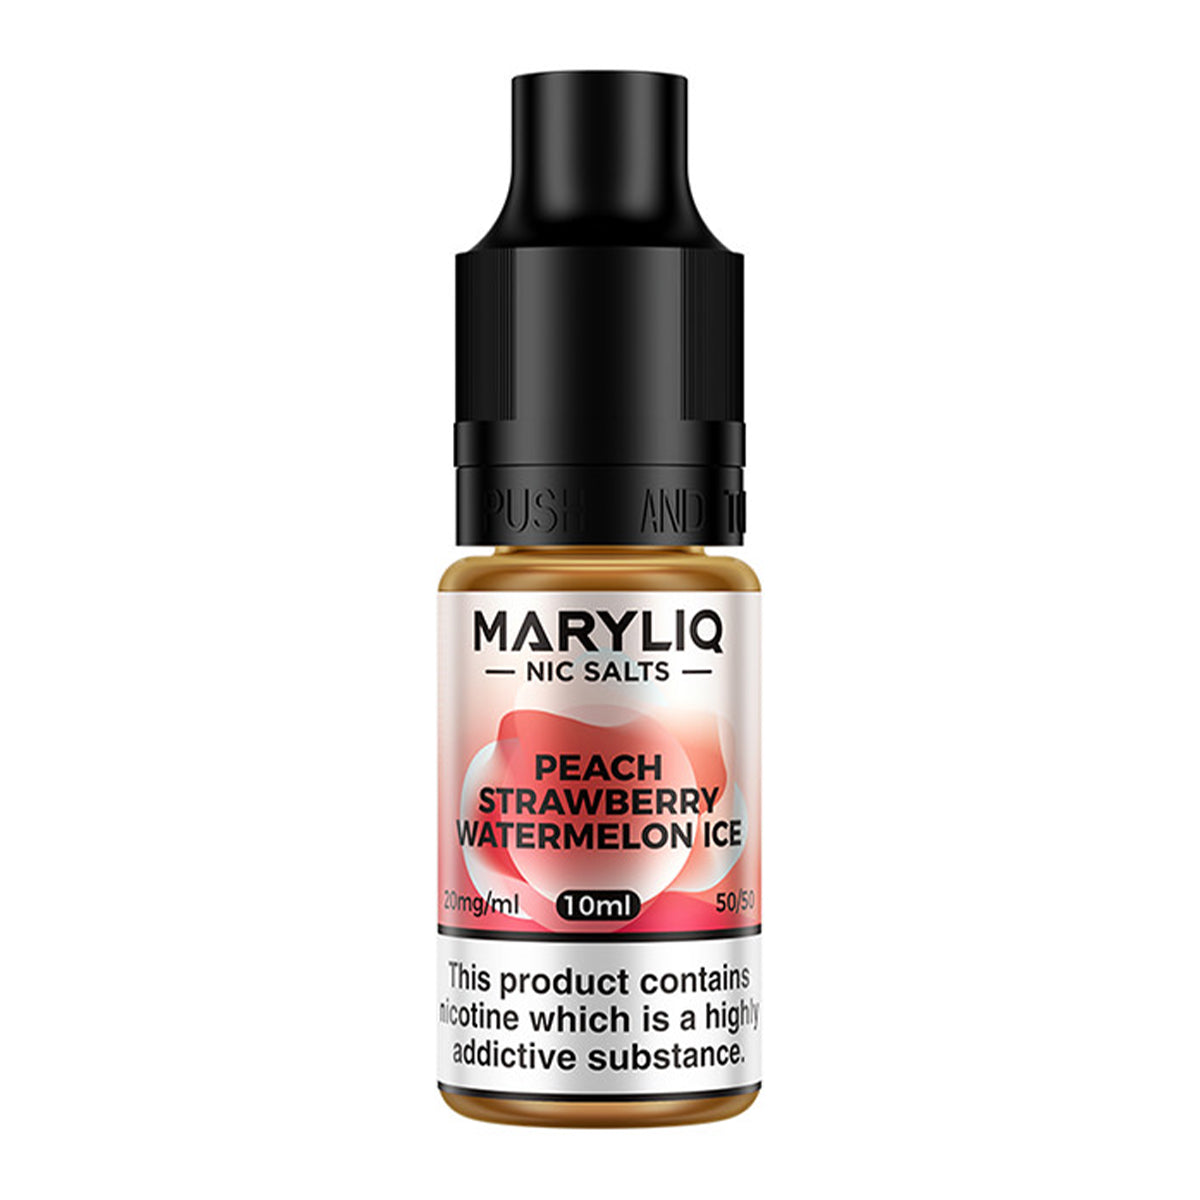 Peach Strawberry Watermelon Ice 10ml Nicotine Salt by Lost Mary Maryliq